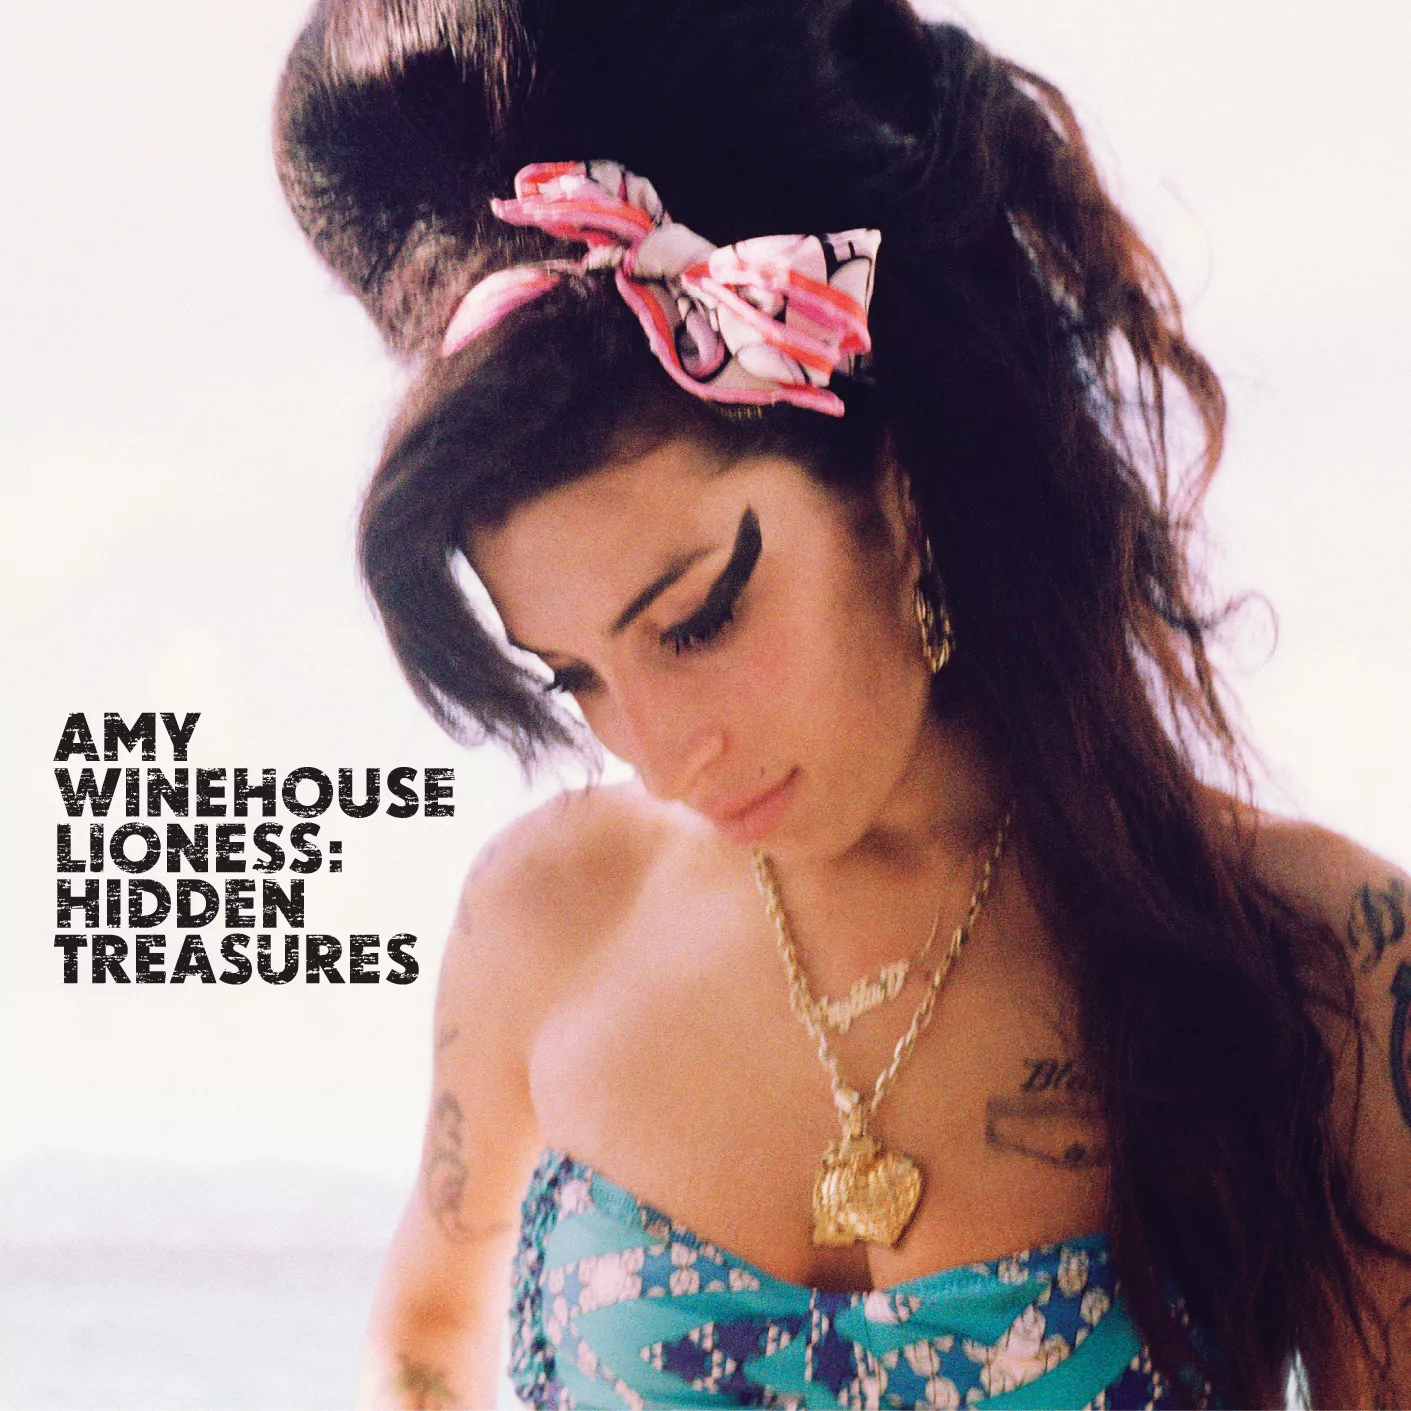 Lioness: Hidden Treasures - Amy Winehouse